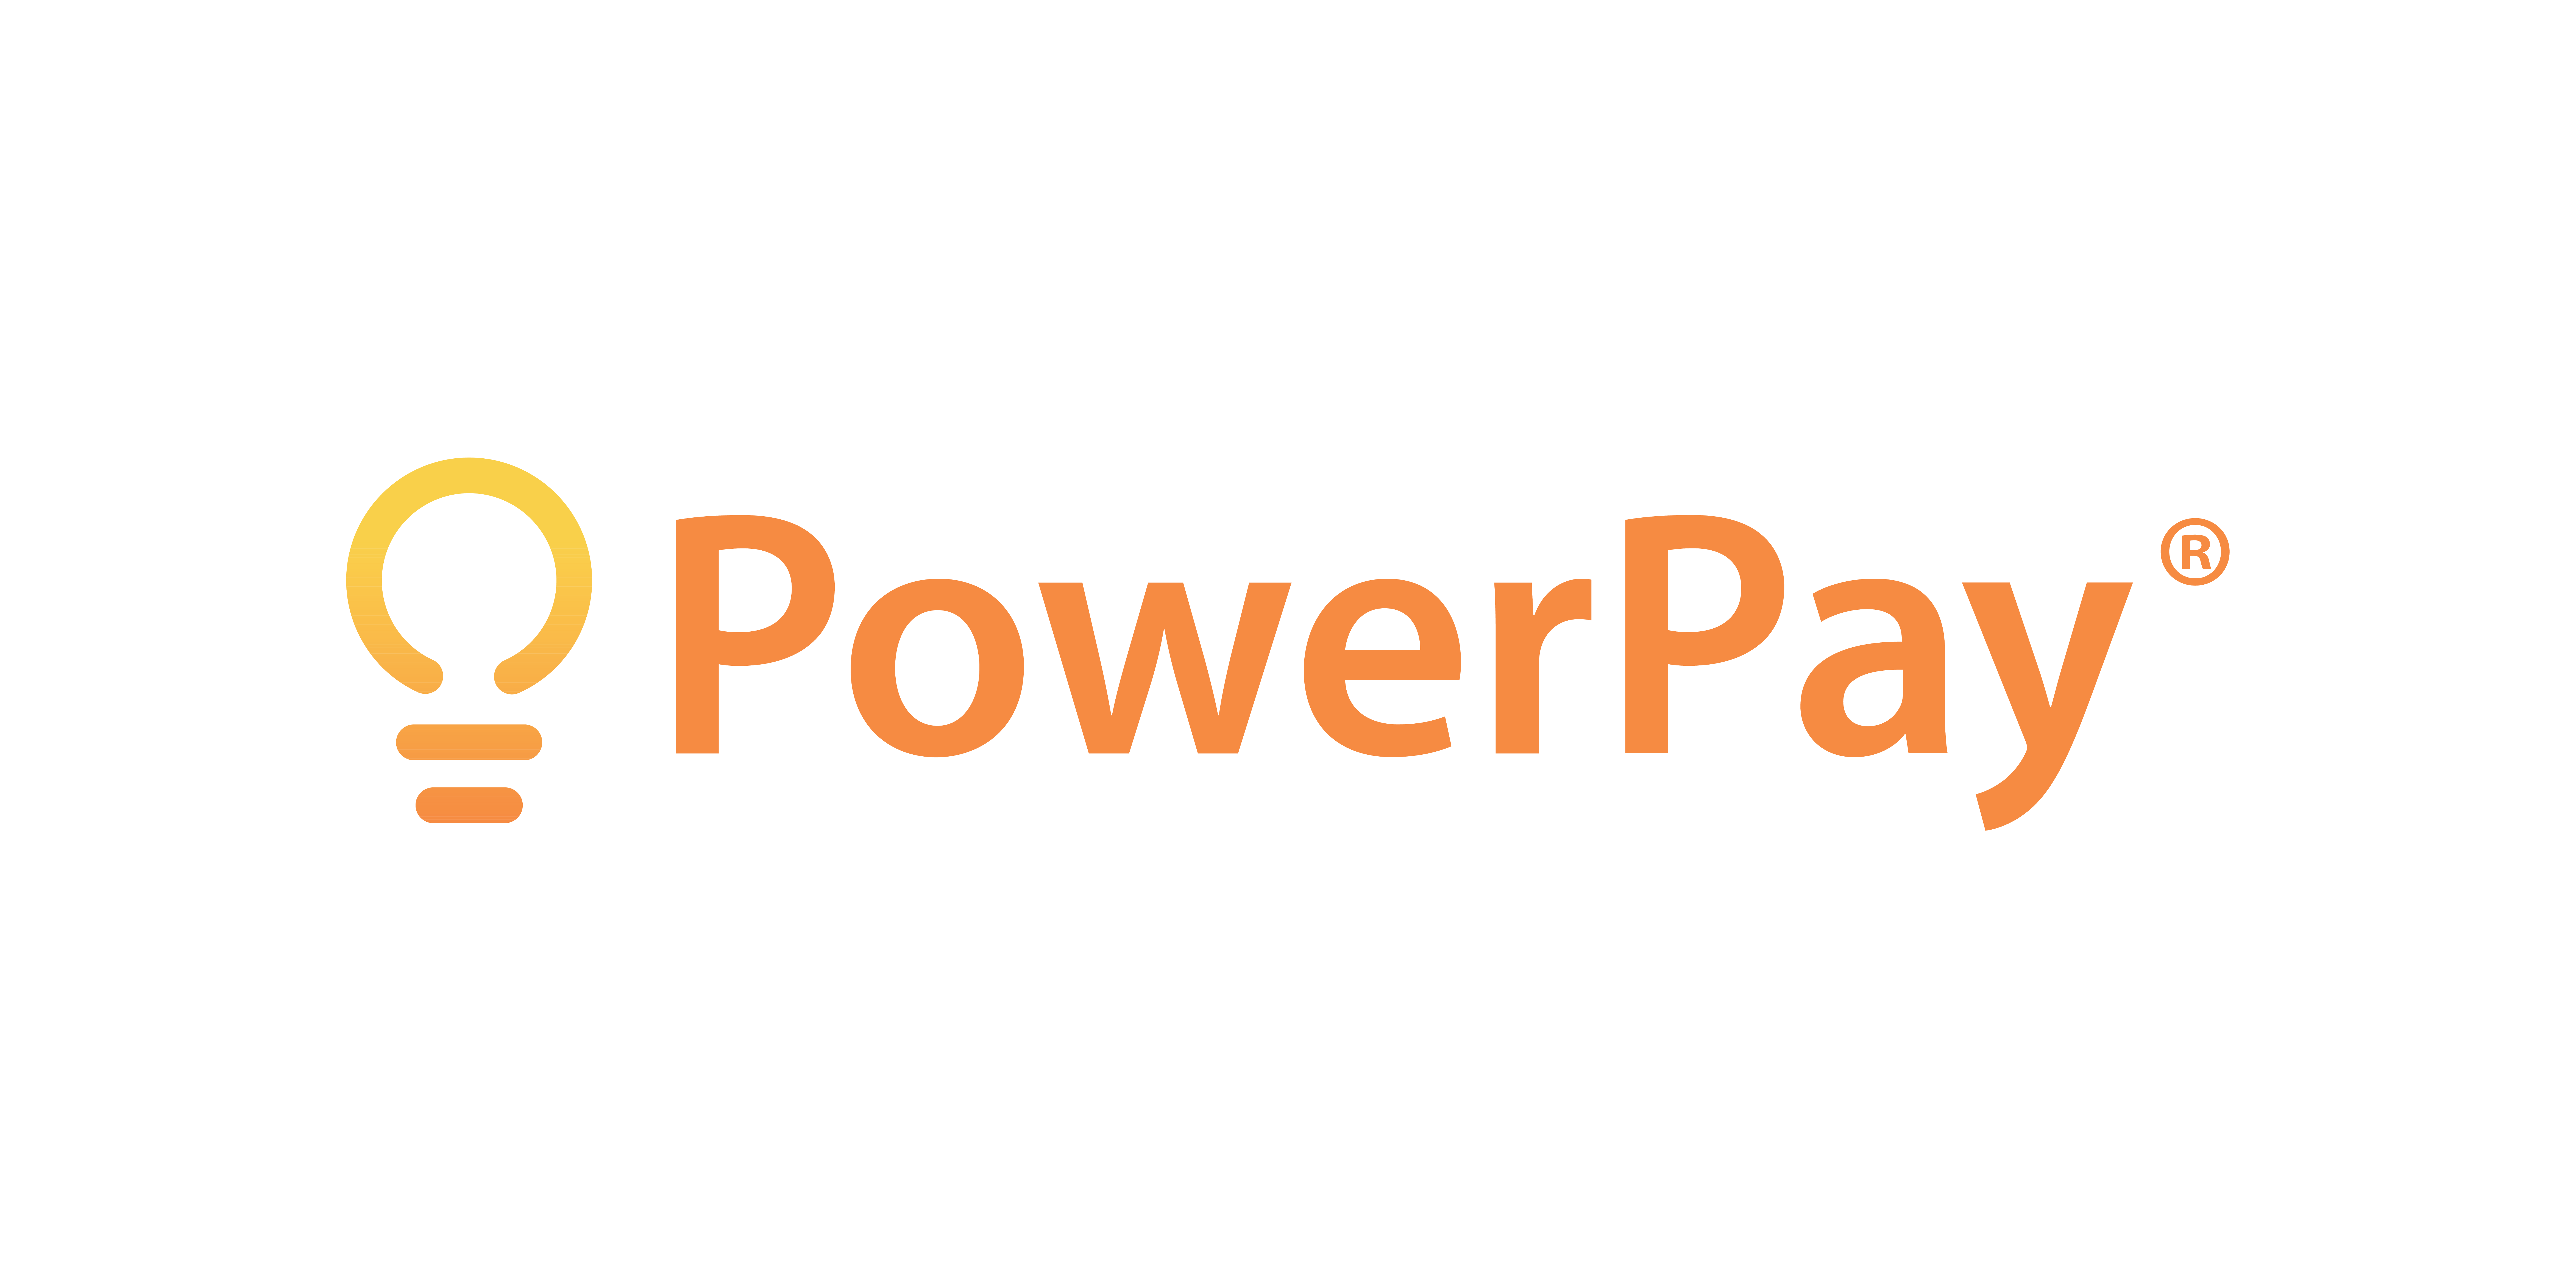 powerpay logo